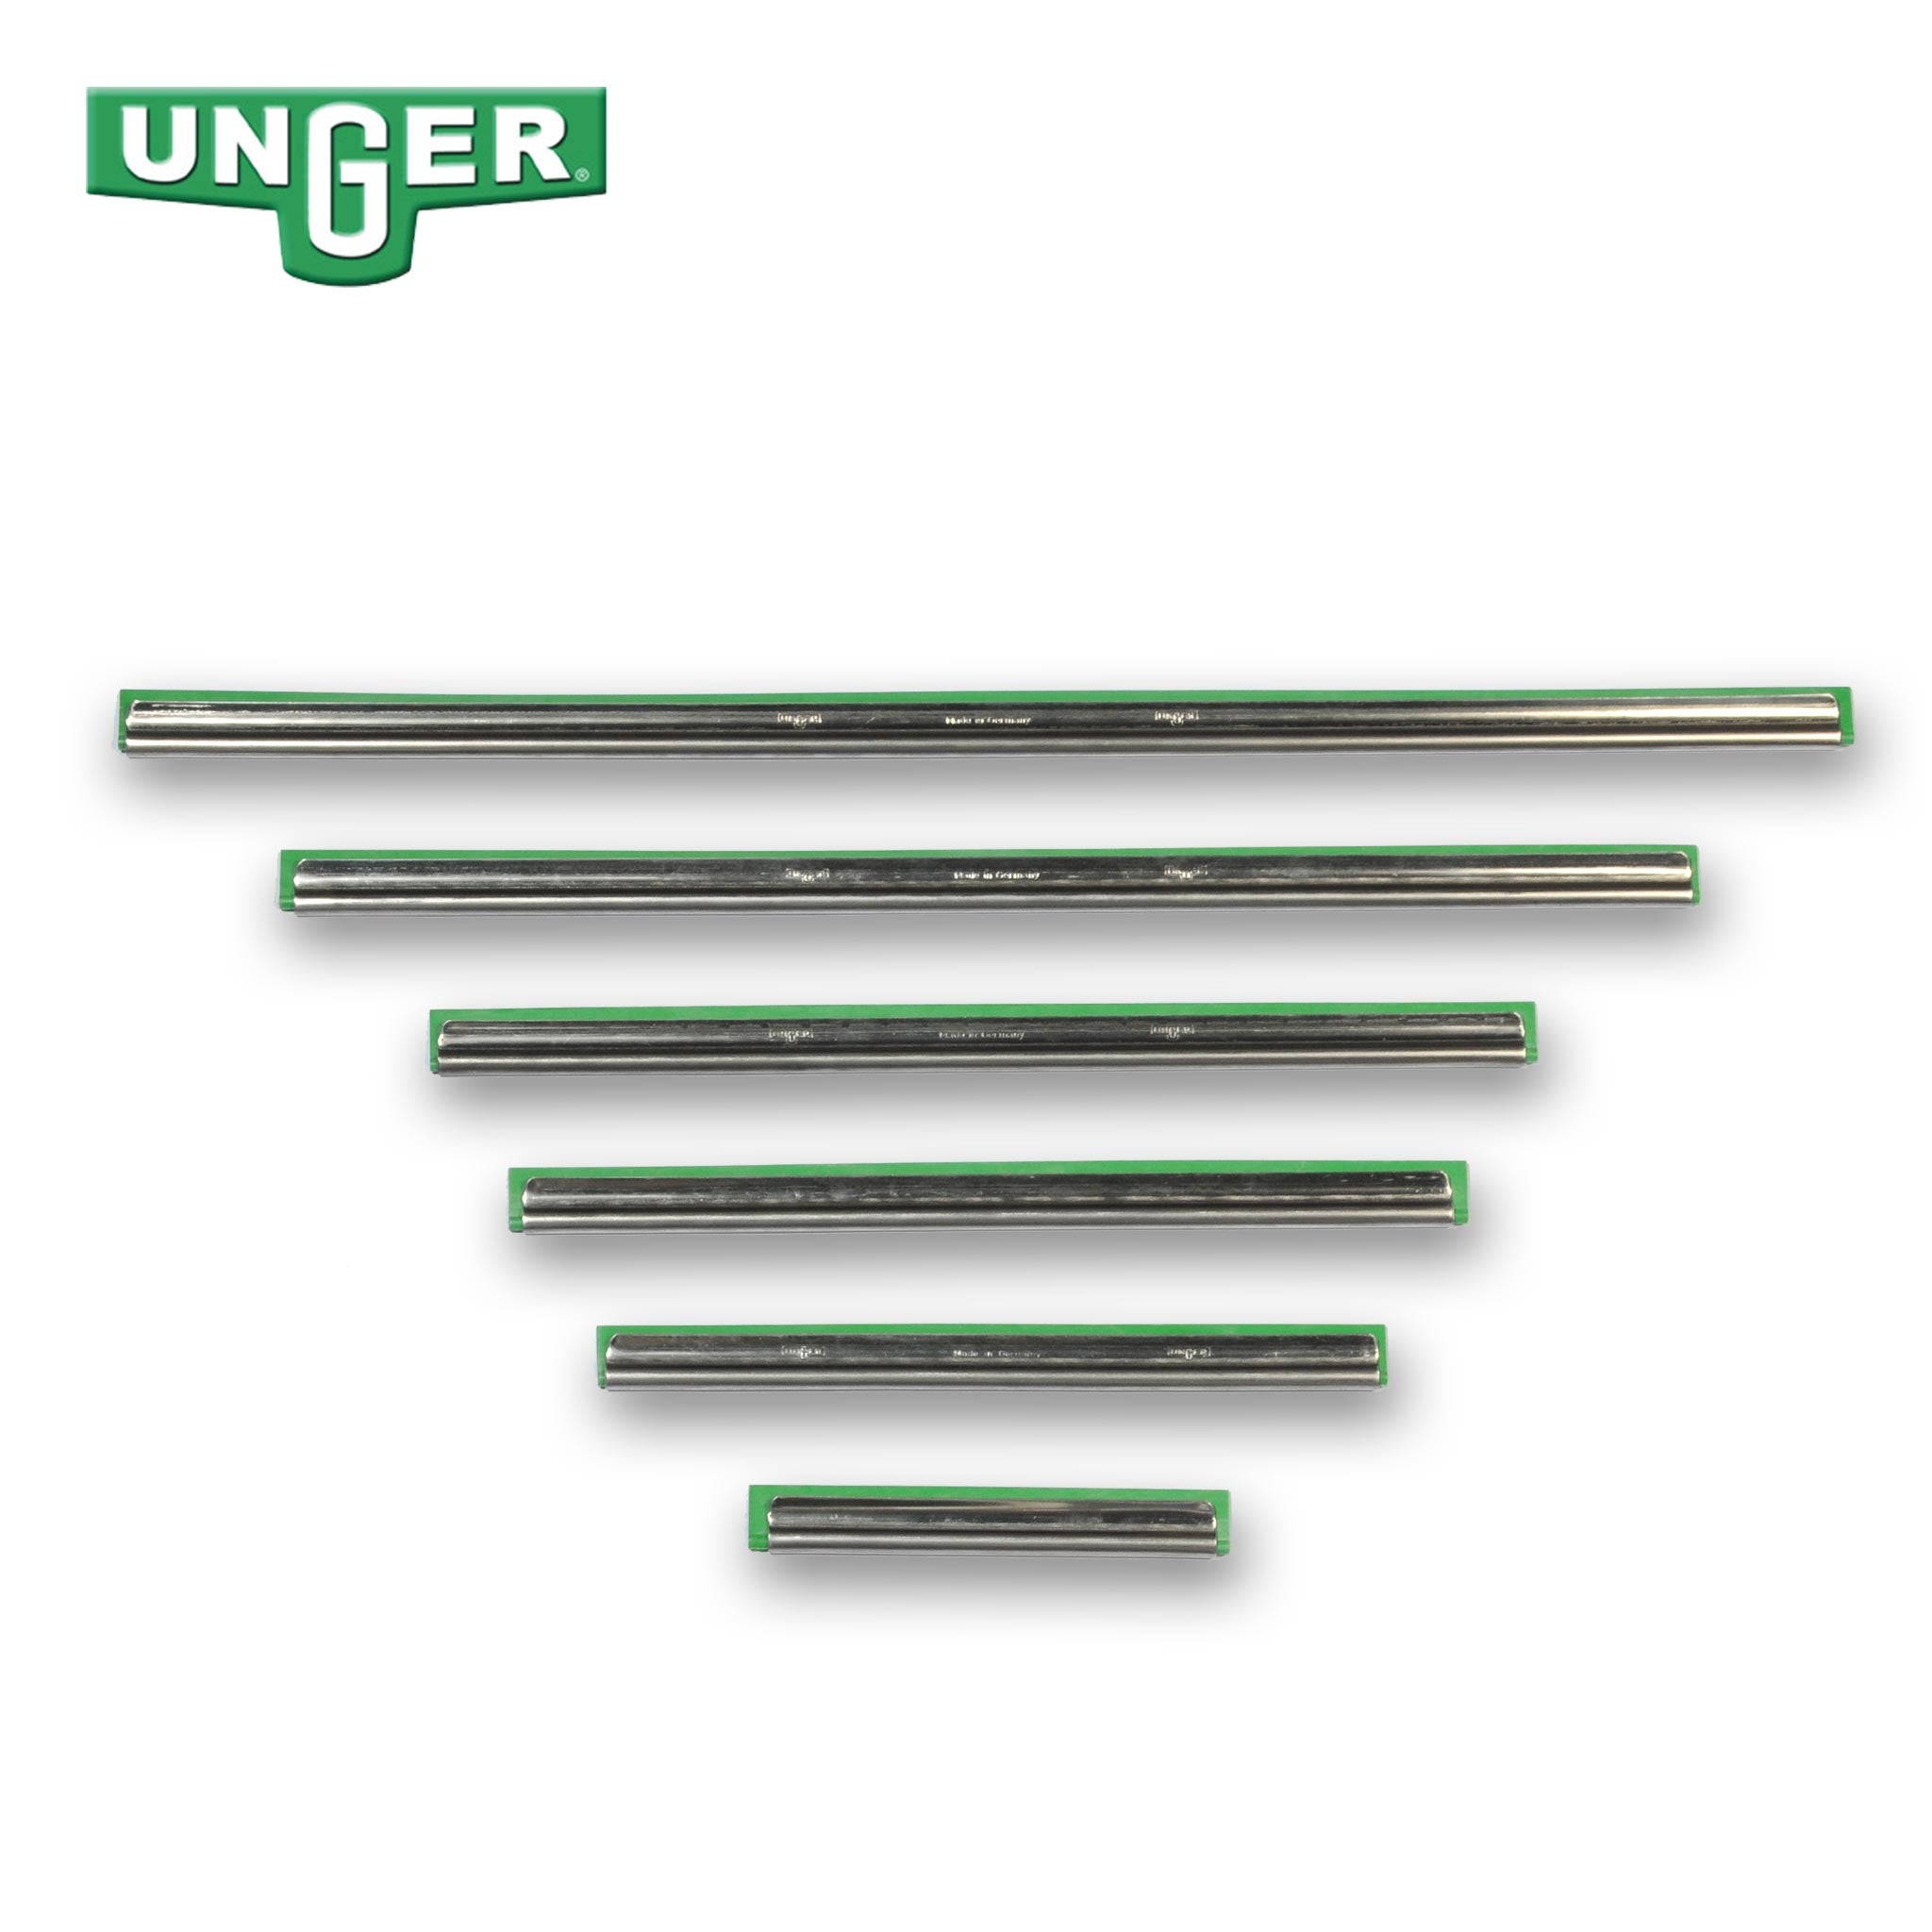 Unger ErgoTec Window Squeegee – Green Rubber